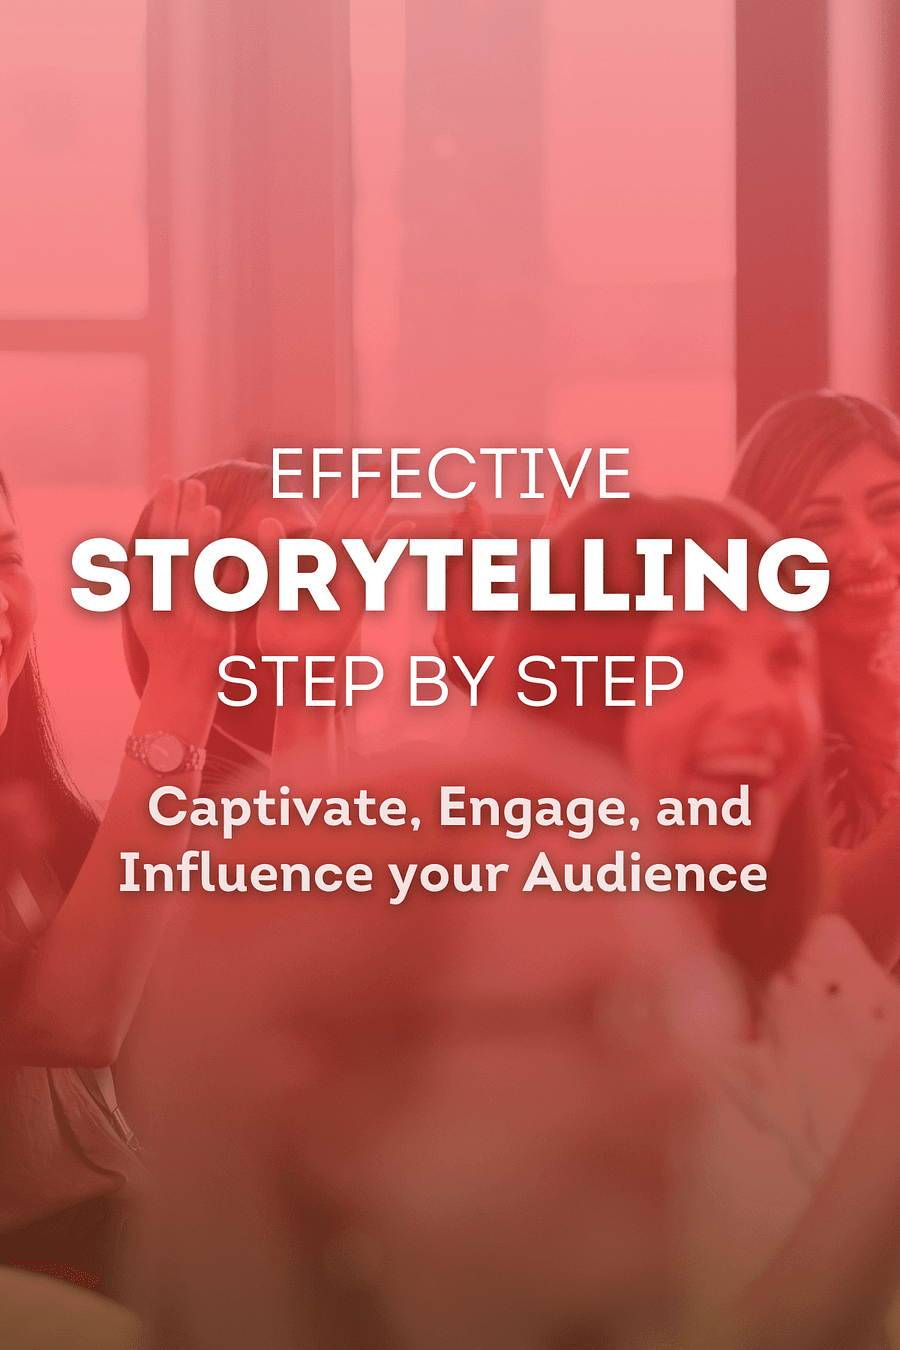 Effective Storytelling Step by Step by O. G. GOAZ - Book Summary